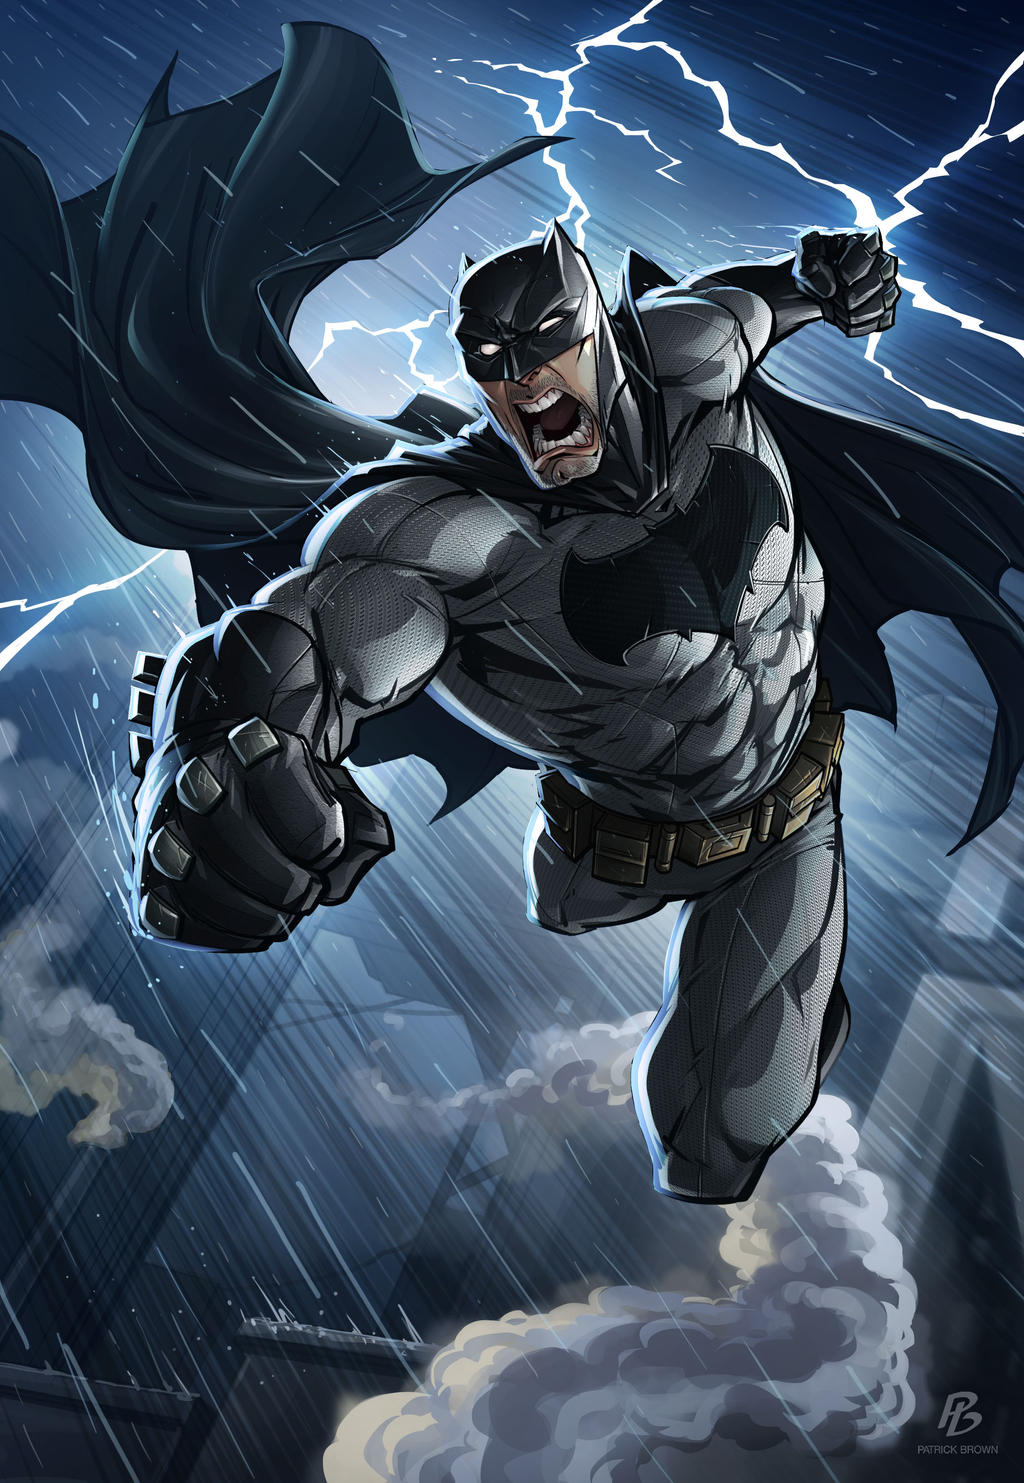 batman_v_superman__dawn_of_justice_by_patrickbrown-d9w598z.jpg